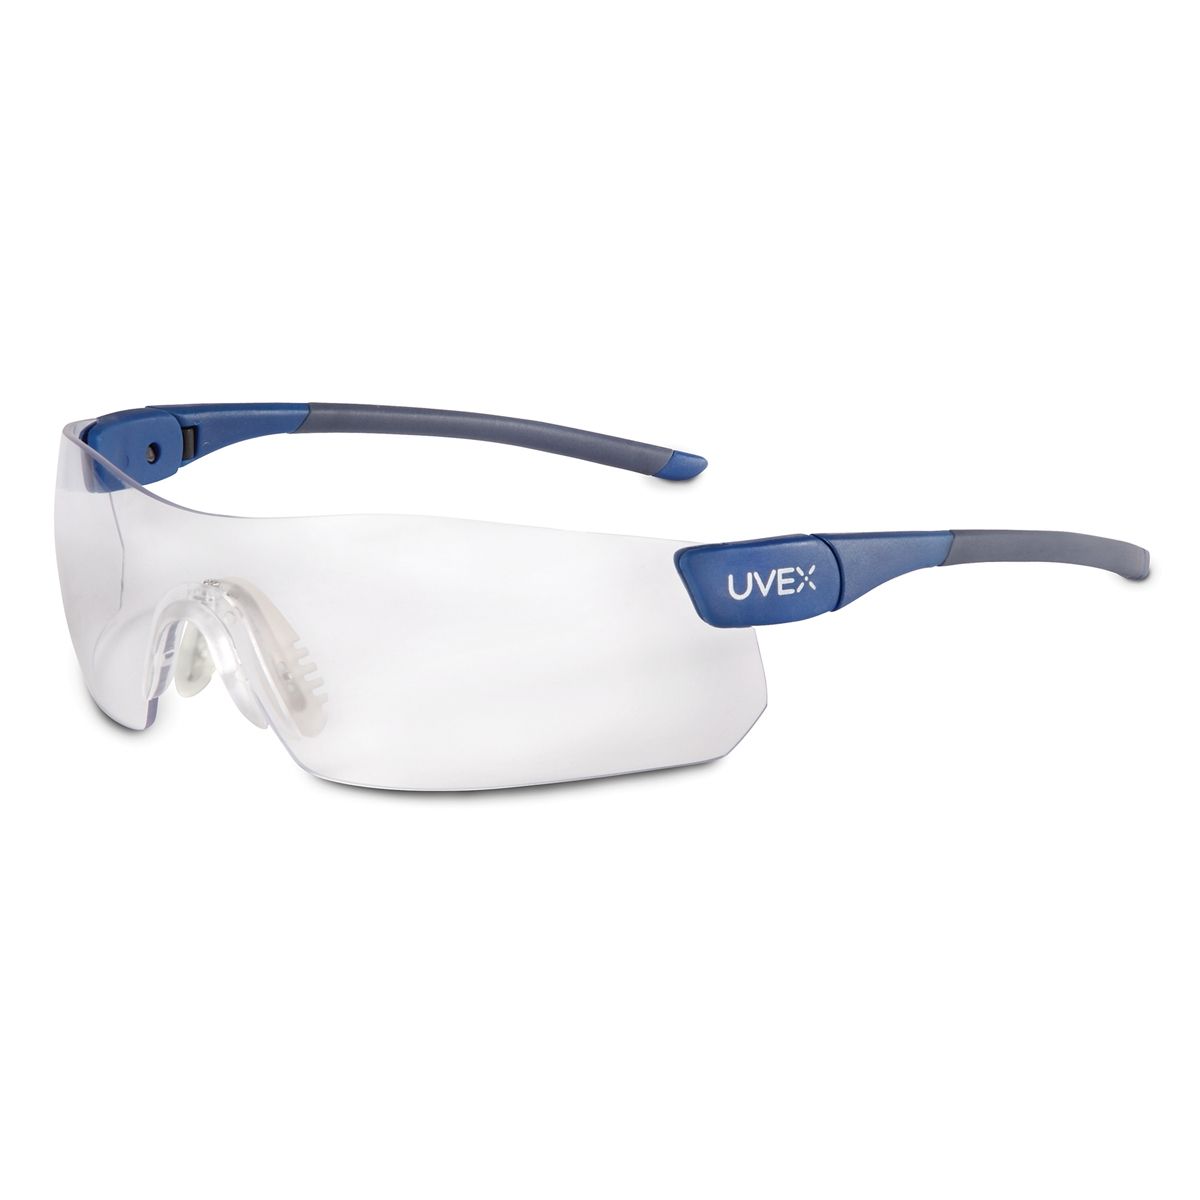 Uvex PrecisionPro Clear lens